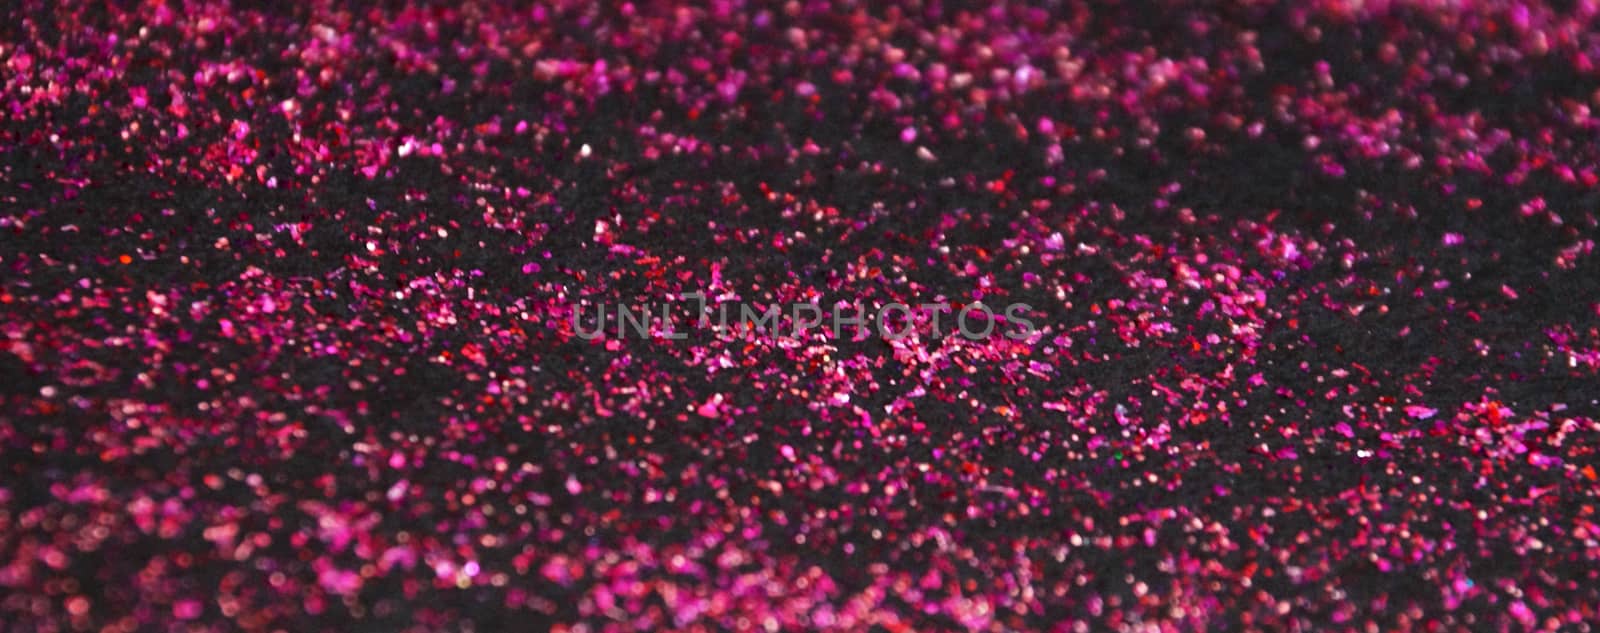 dark pink shiny glitter on black background by Annado